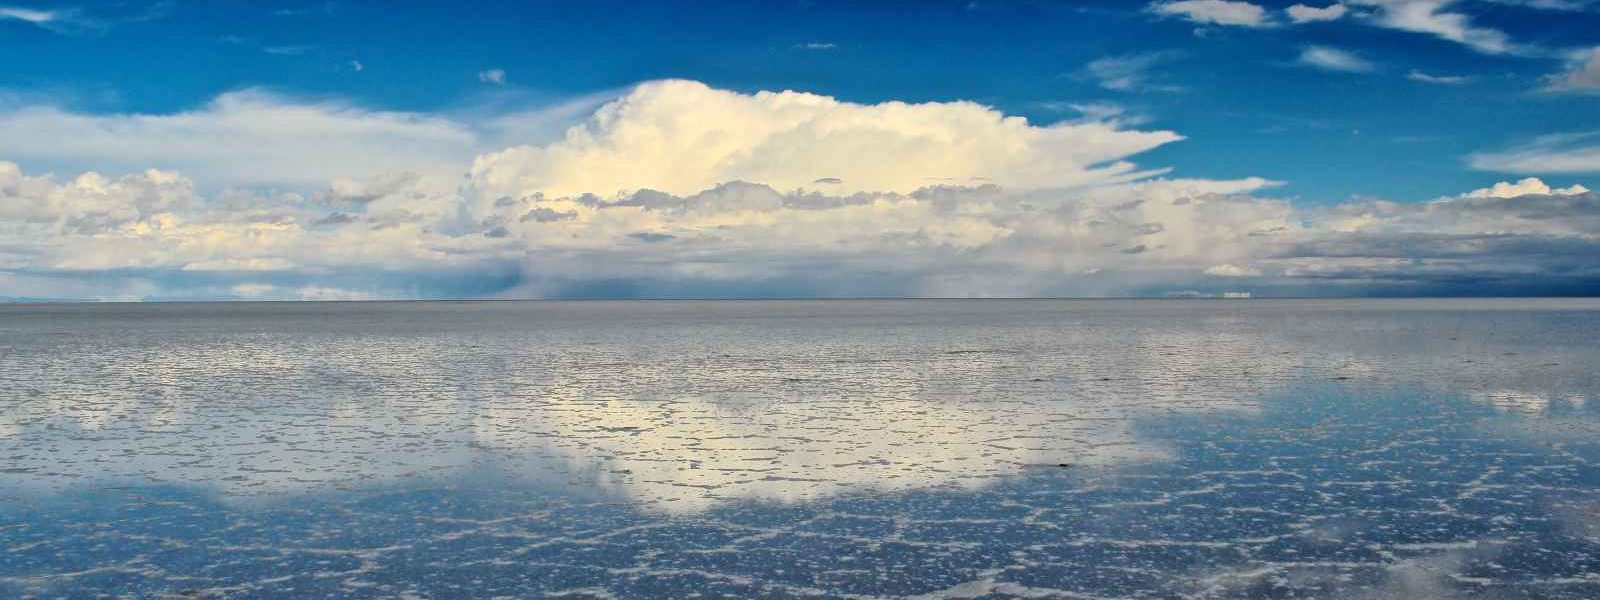 Lac Salar de Uyuni après la pluie, Bolivie